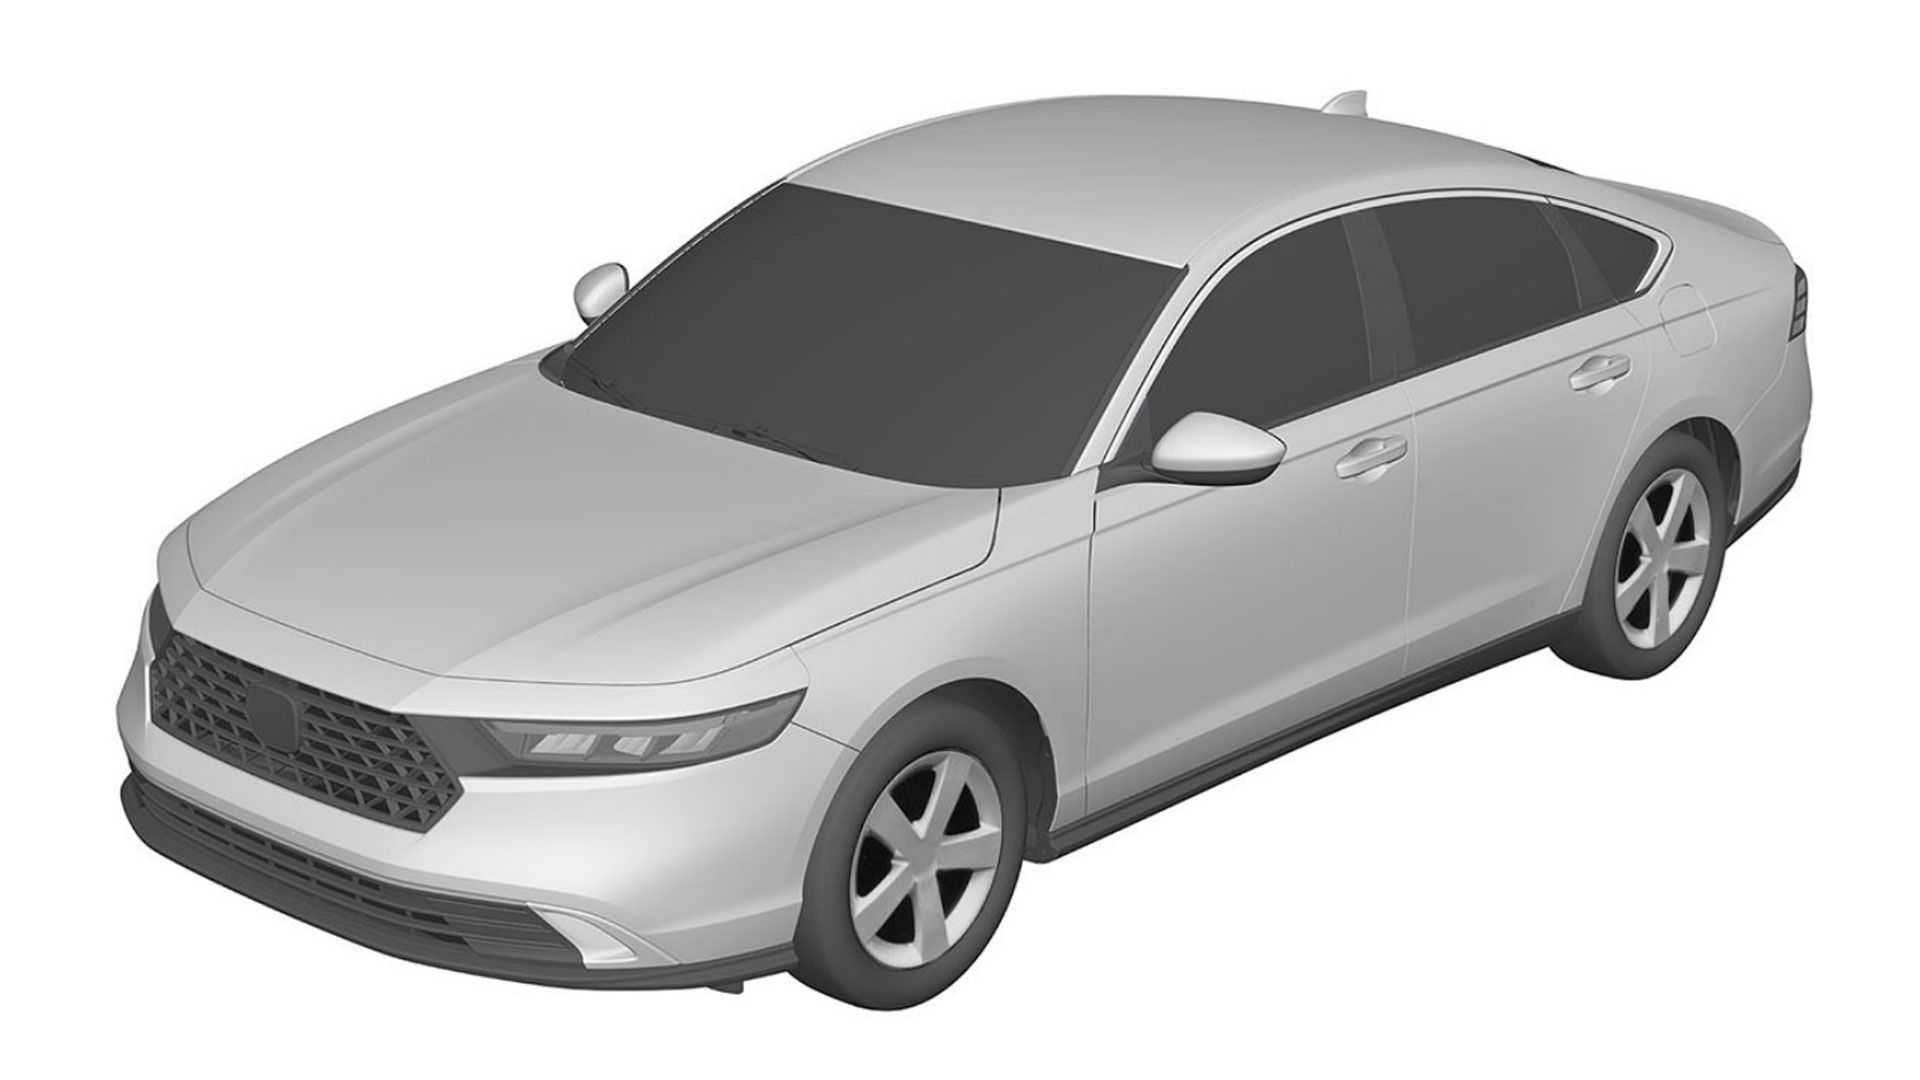 Next Gen Honda Accord Design Leaked In Patent Image